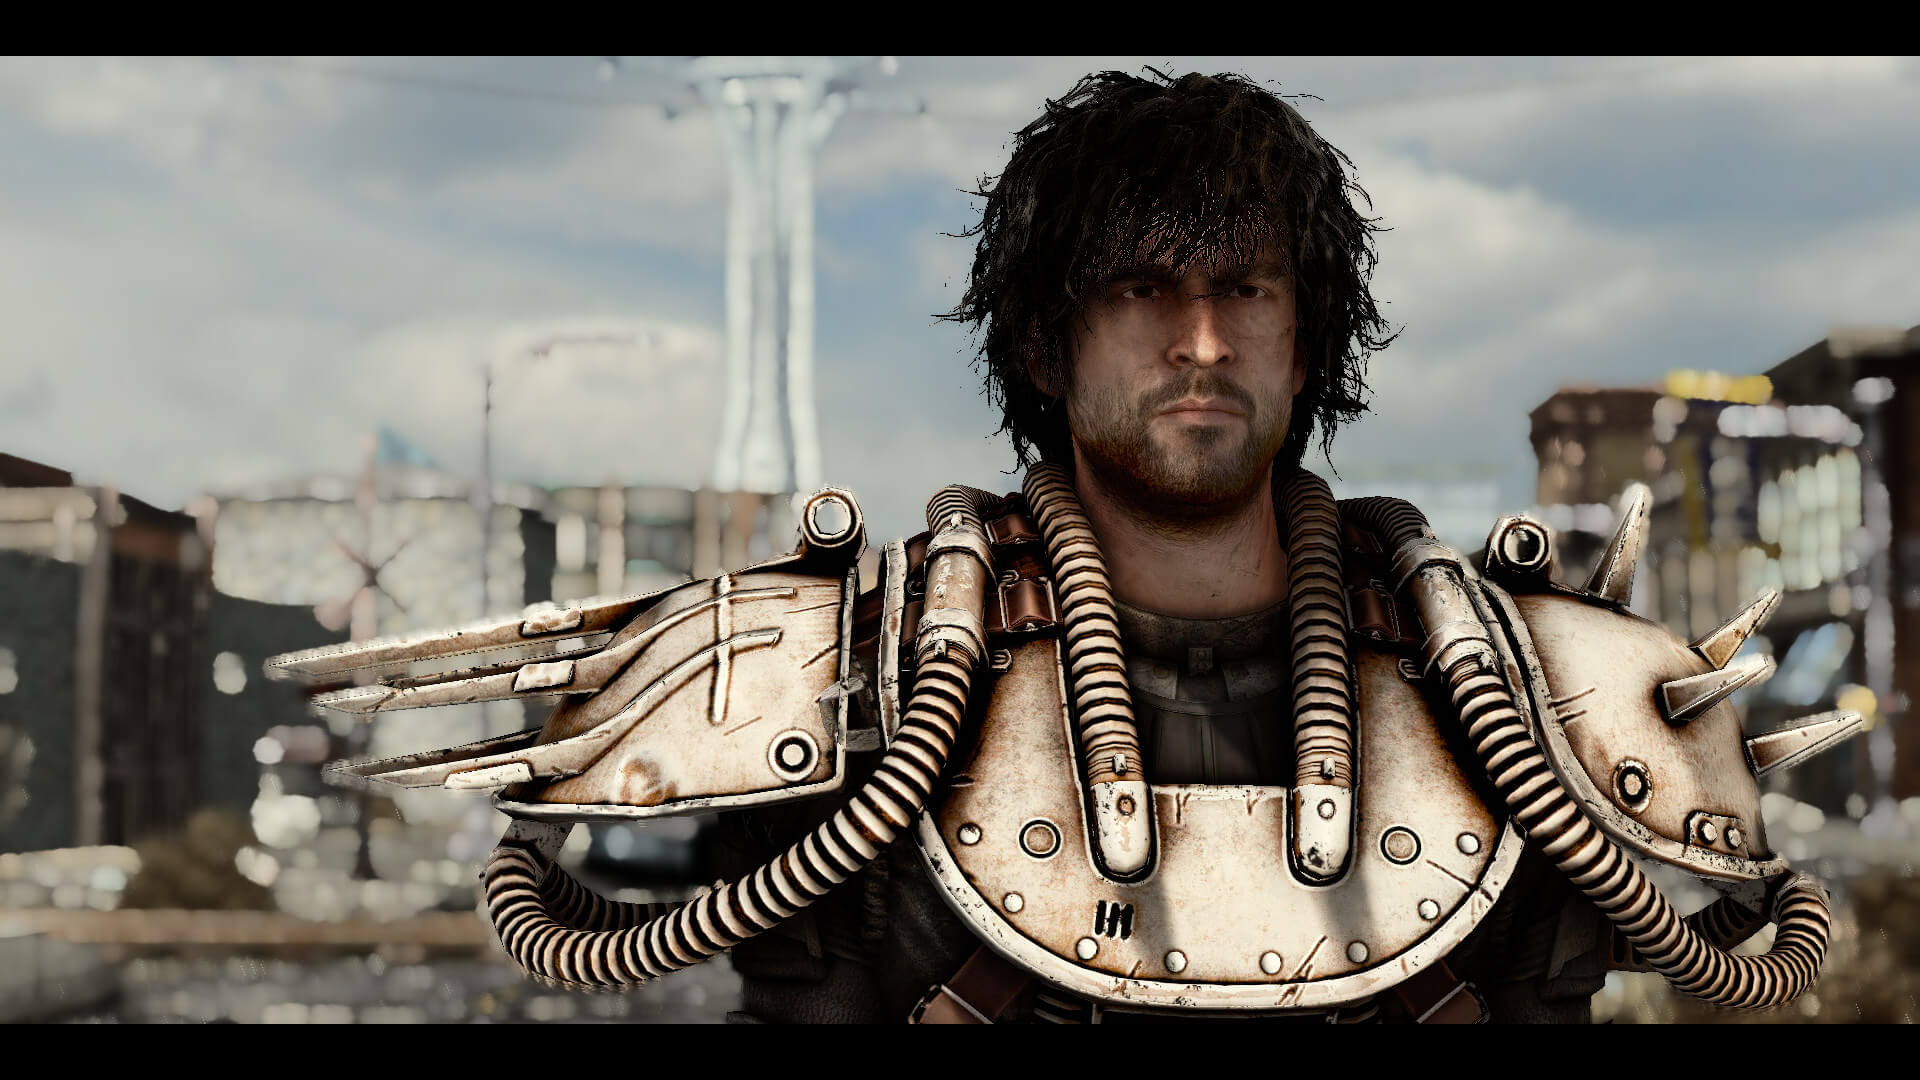 Fallout: New Vegas Mod 2022 - Novac Overhaul 4K 